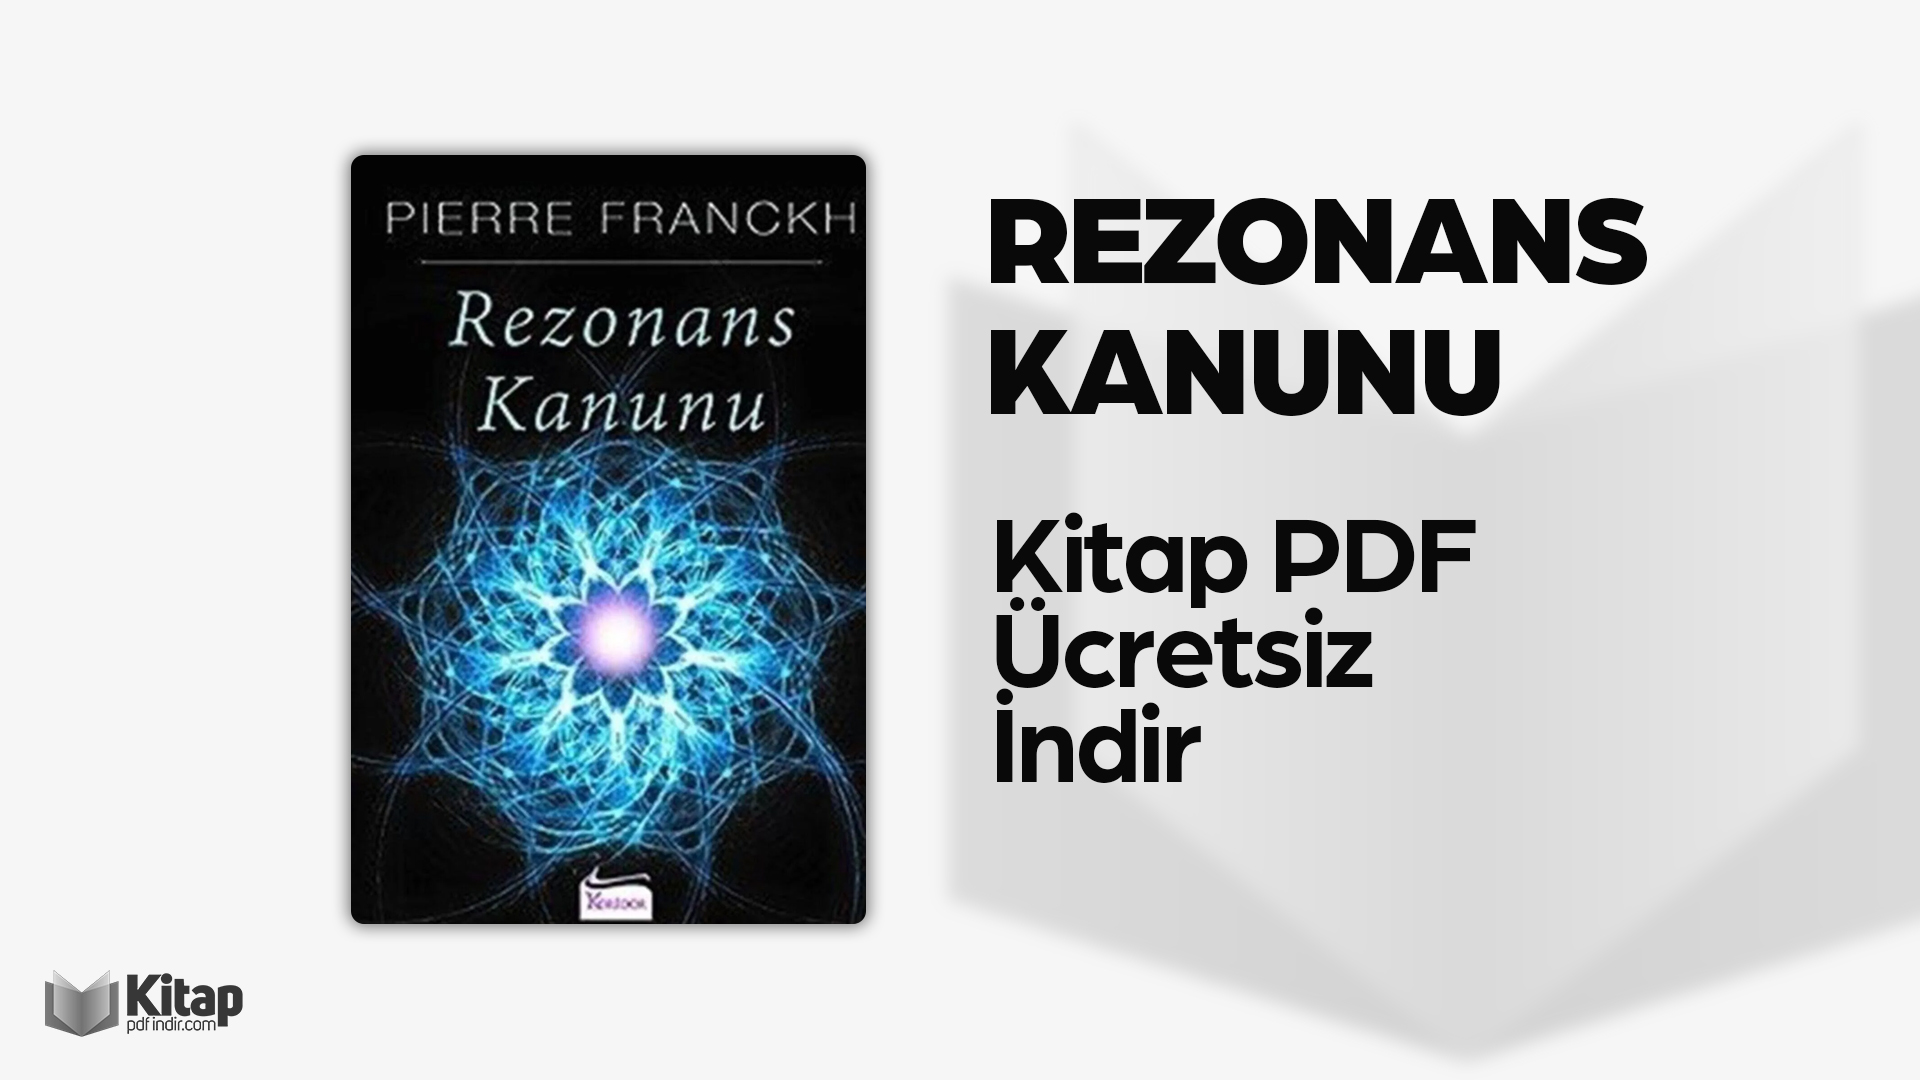 Pierre Franckh Rezonans Kanunu PDF İndir